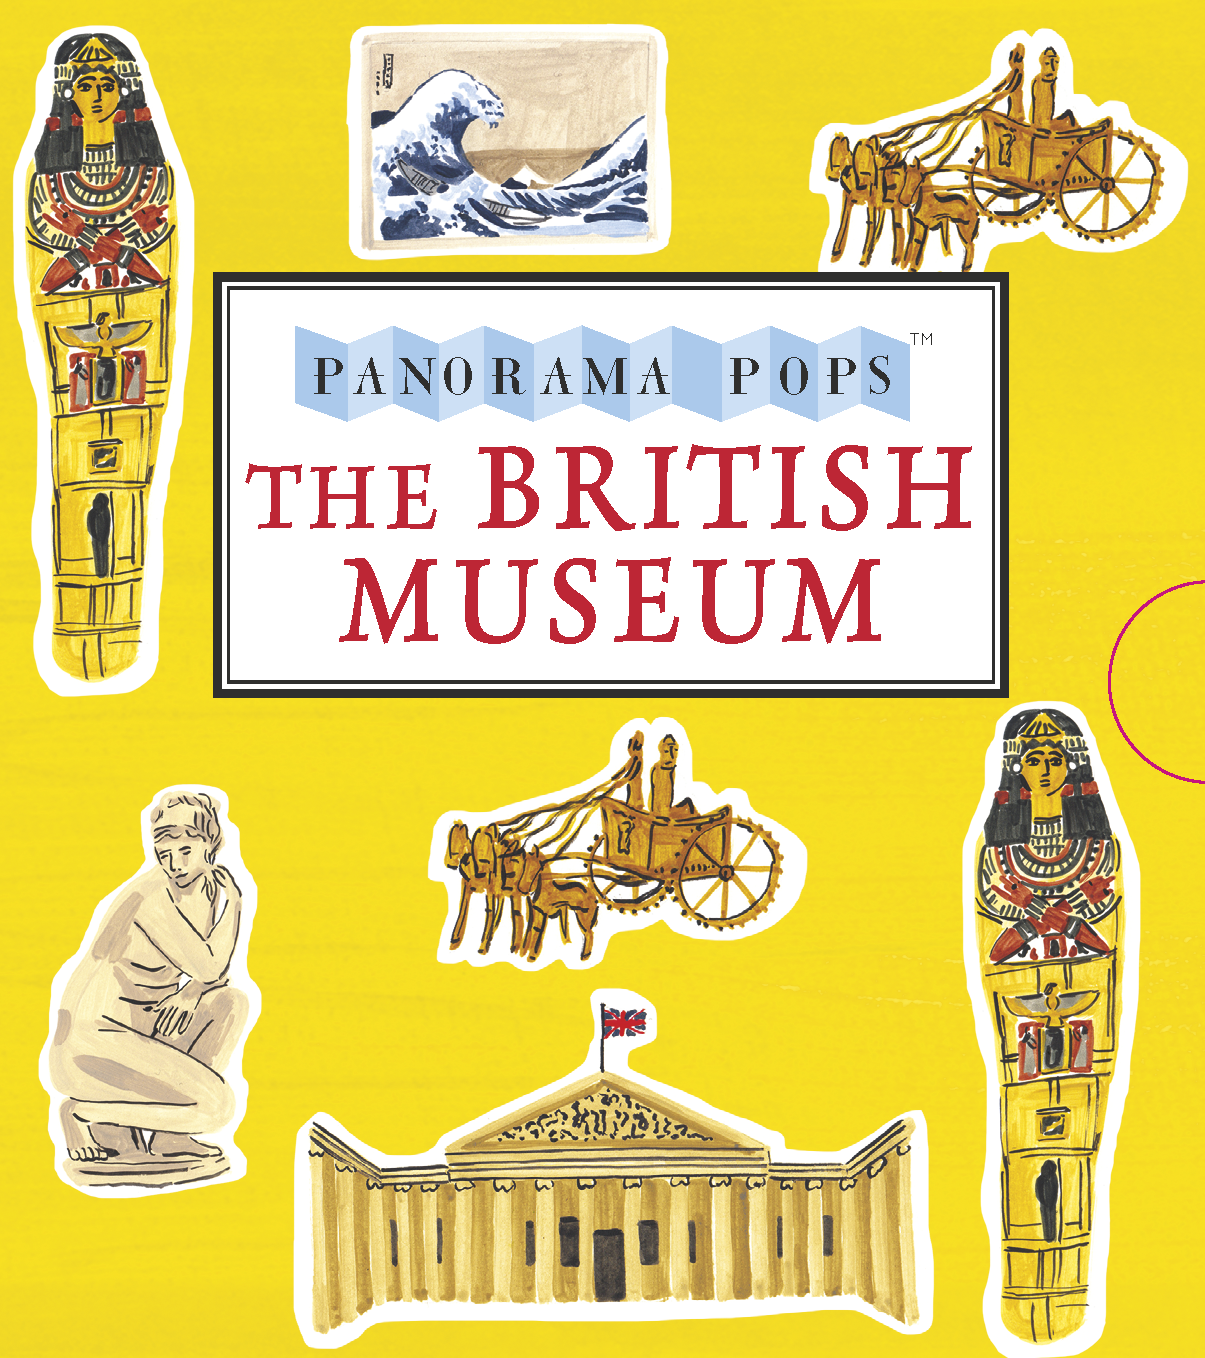 The-British-Museum-Panorama-Pops